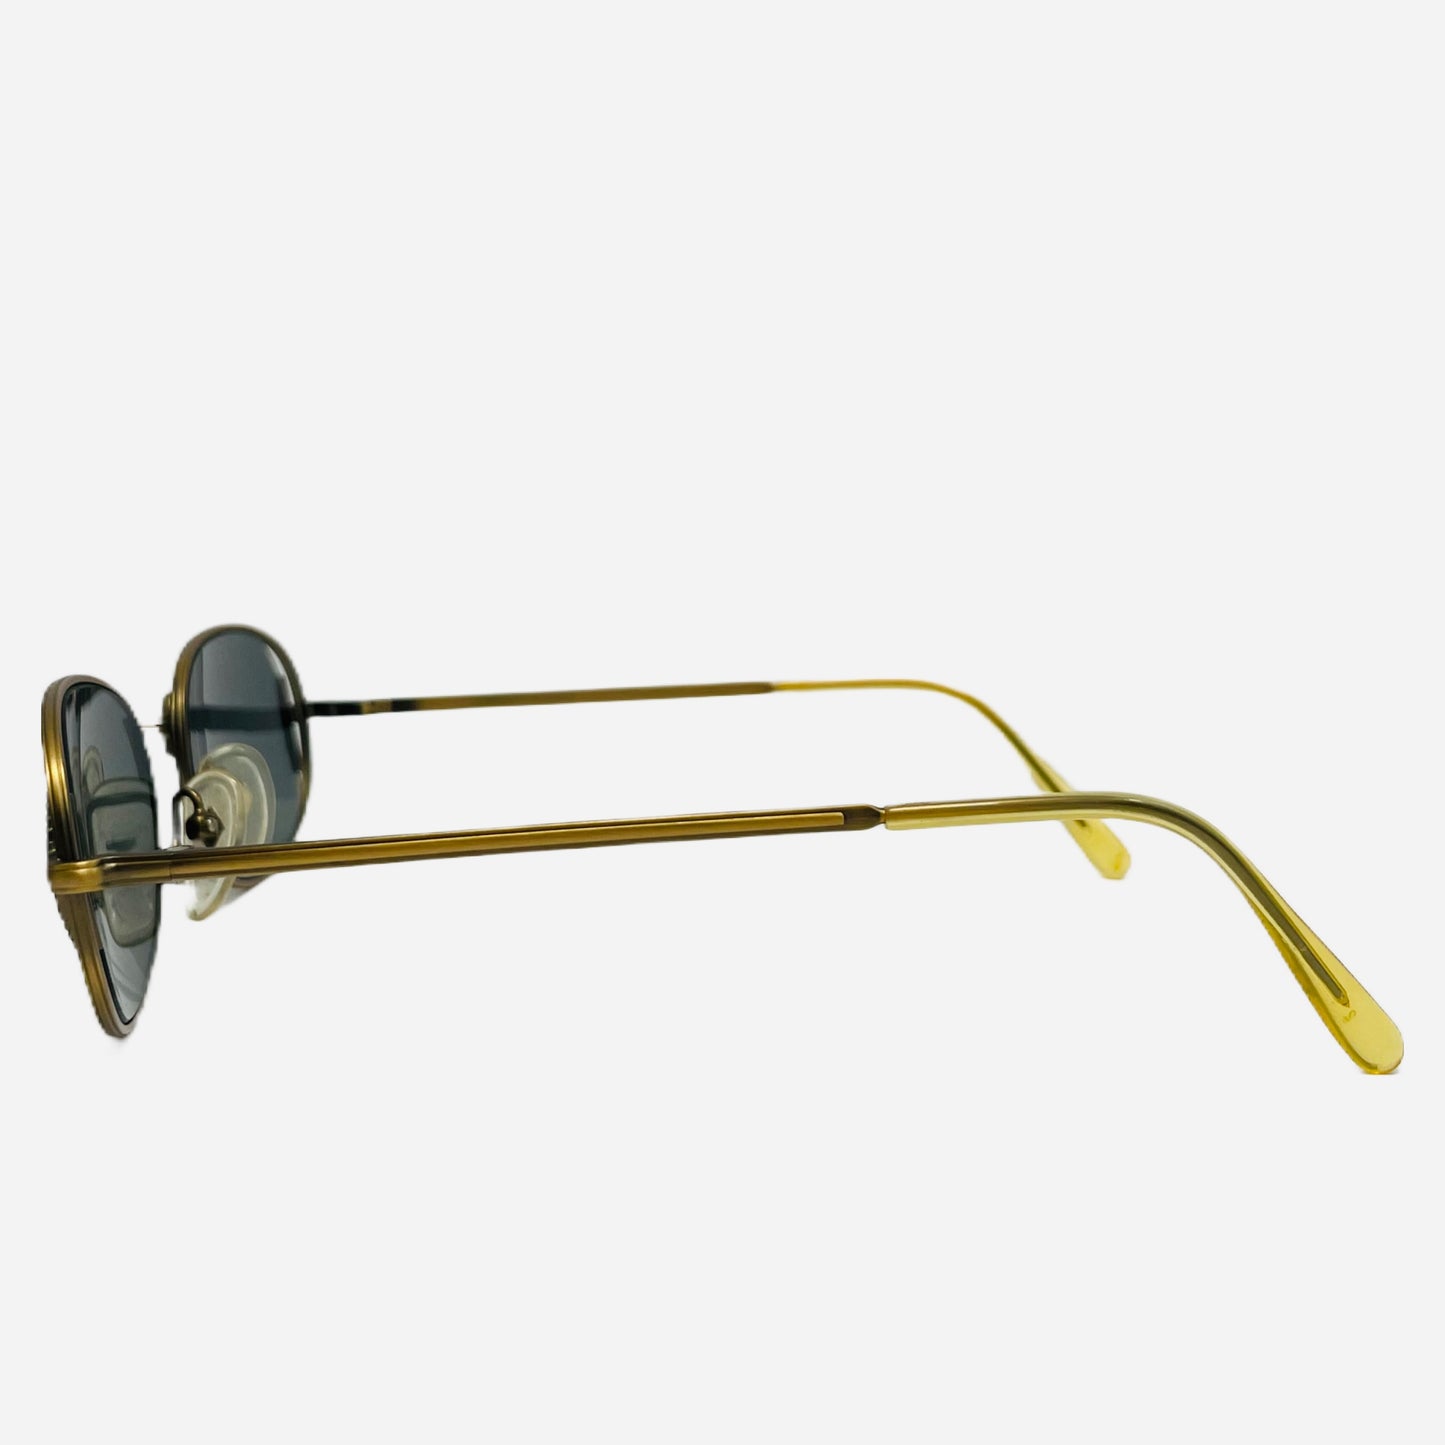 Vintage-Jean-Paul-Gaultier-Sonnenbrille-Sunglasses-Model56-3172-made-in-japan-the-seekers-side